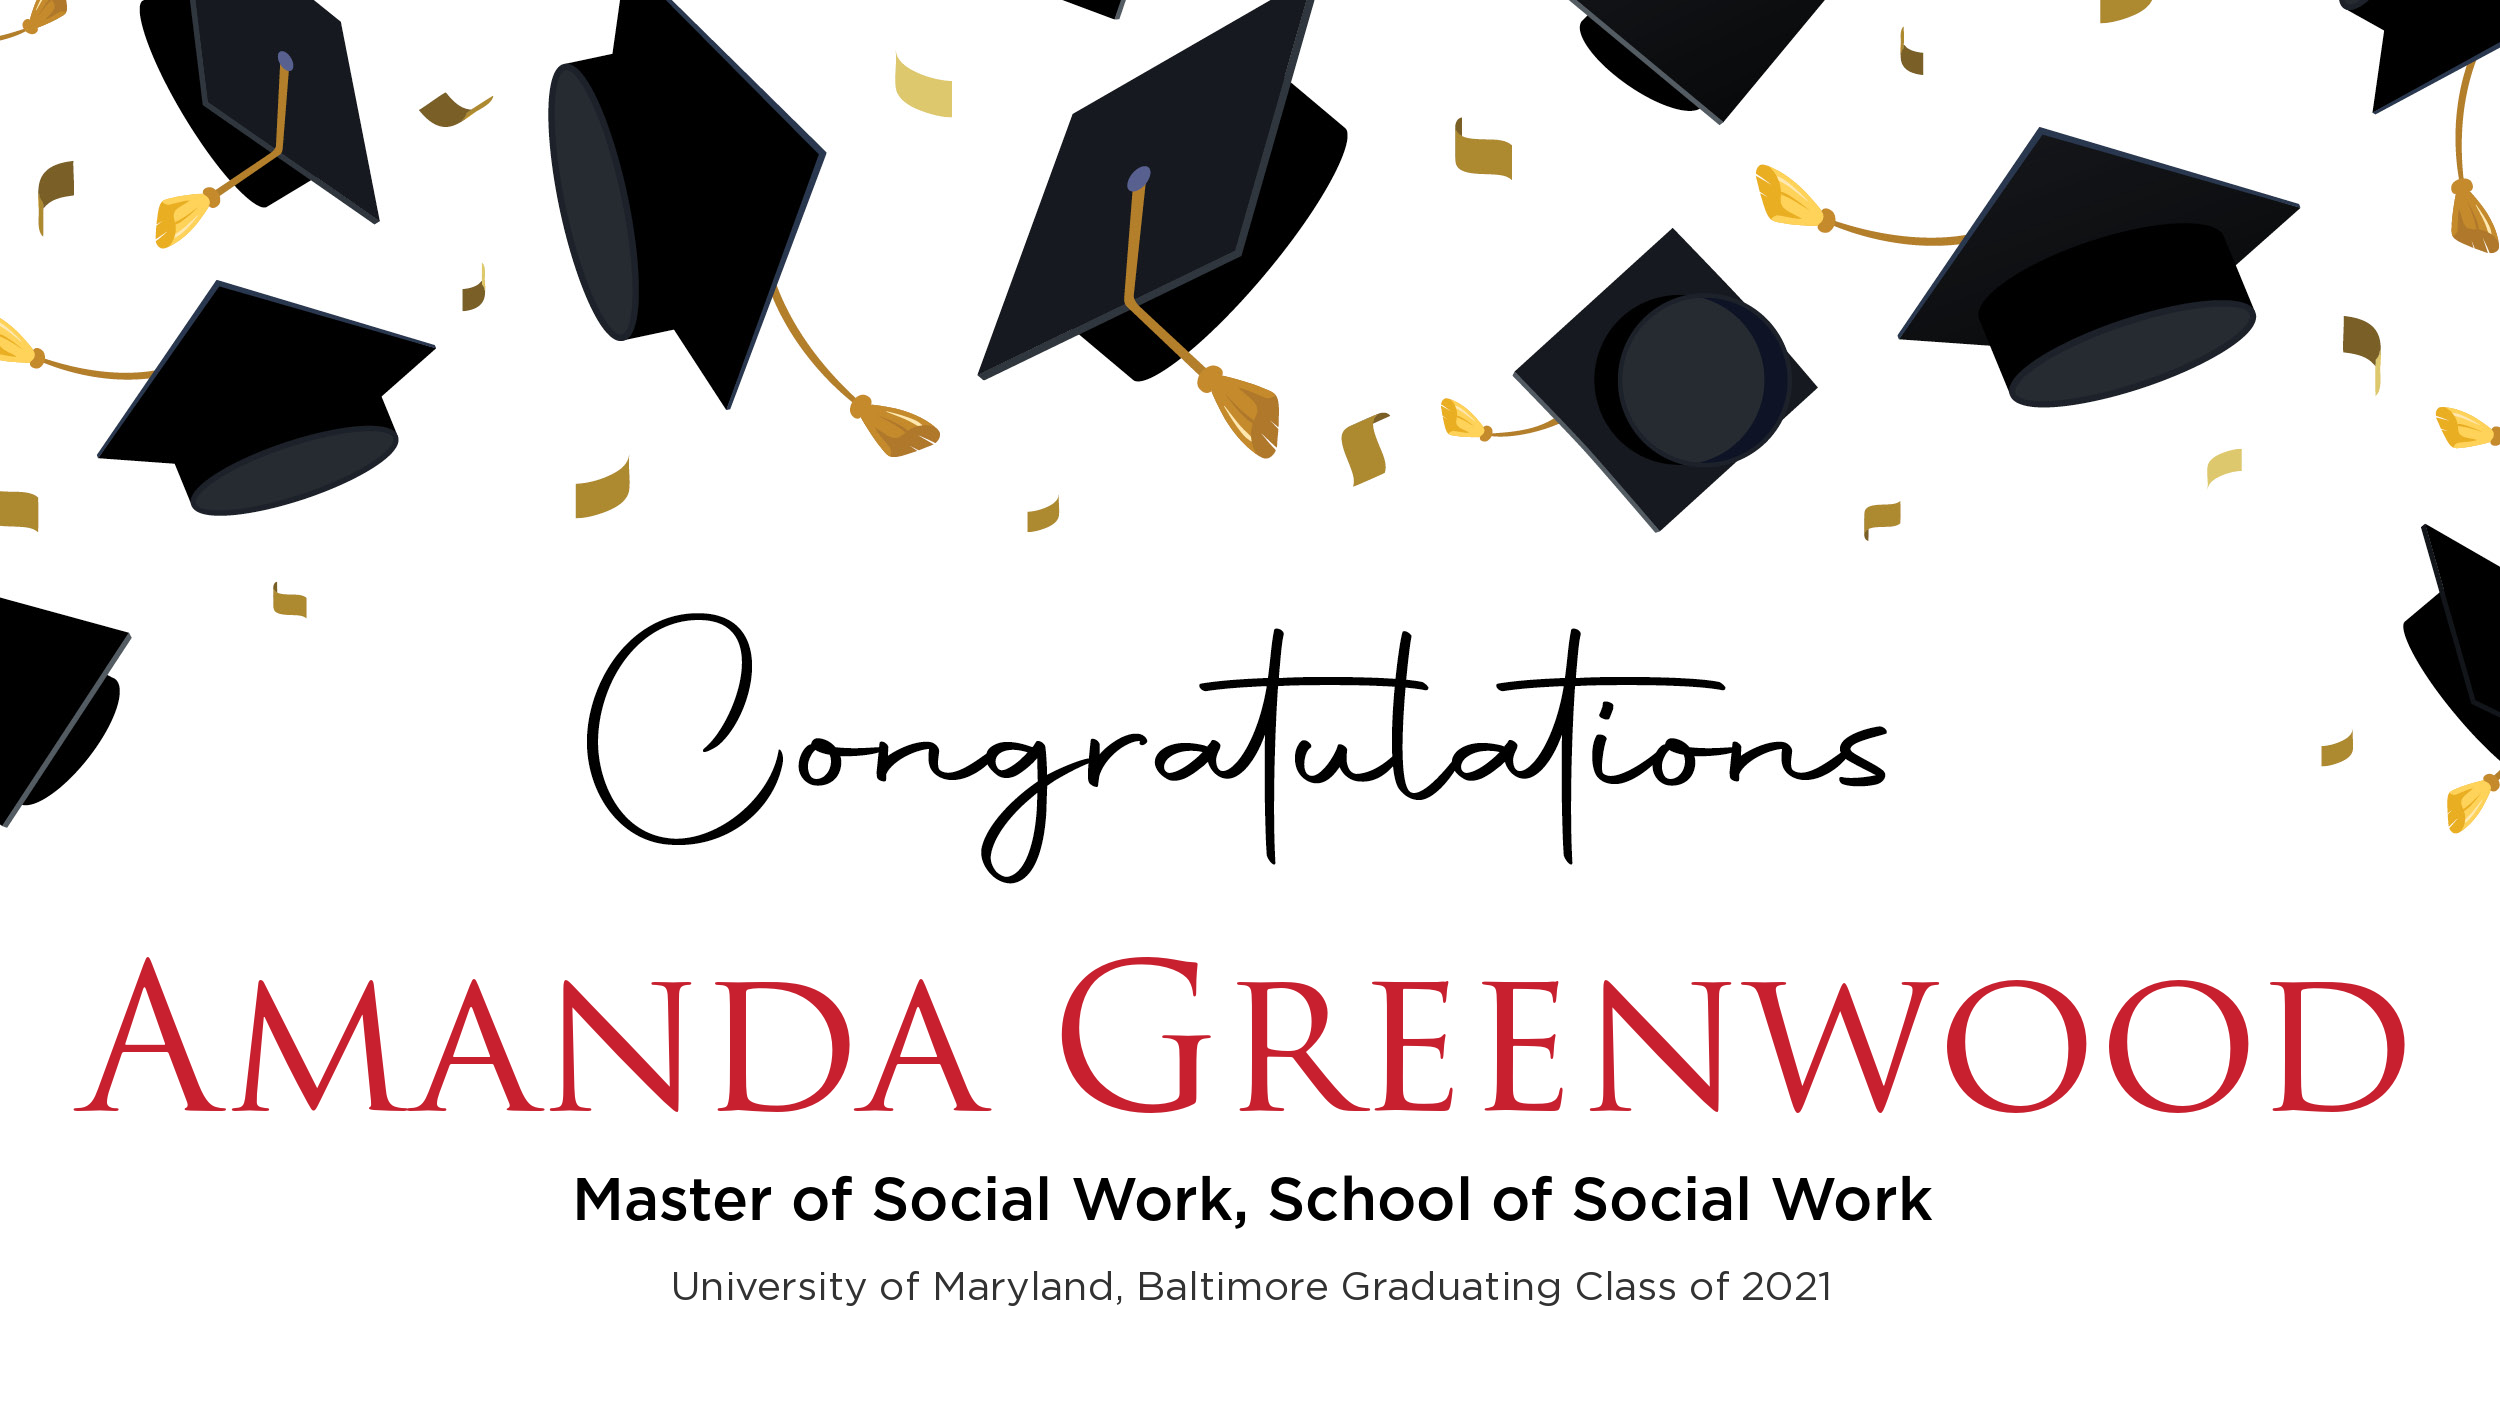 Congratulations Amanda Greenwood, Master of Social Work